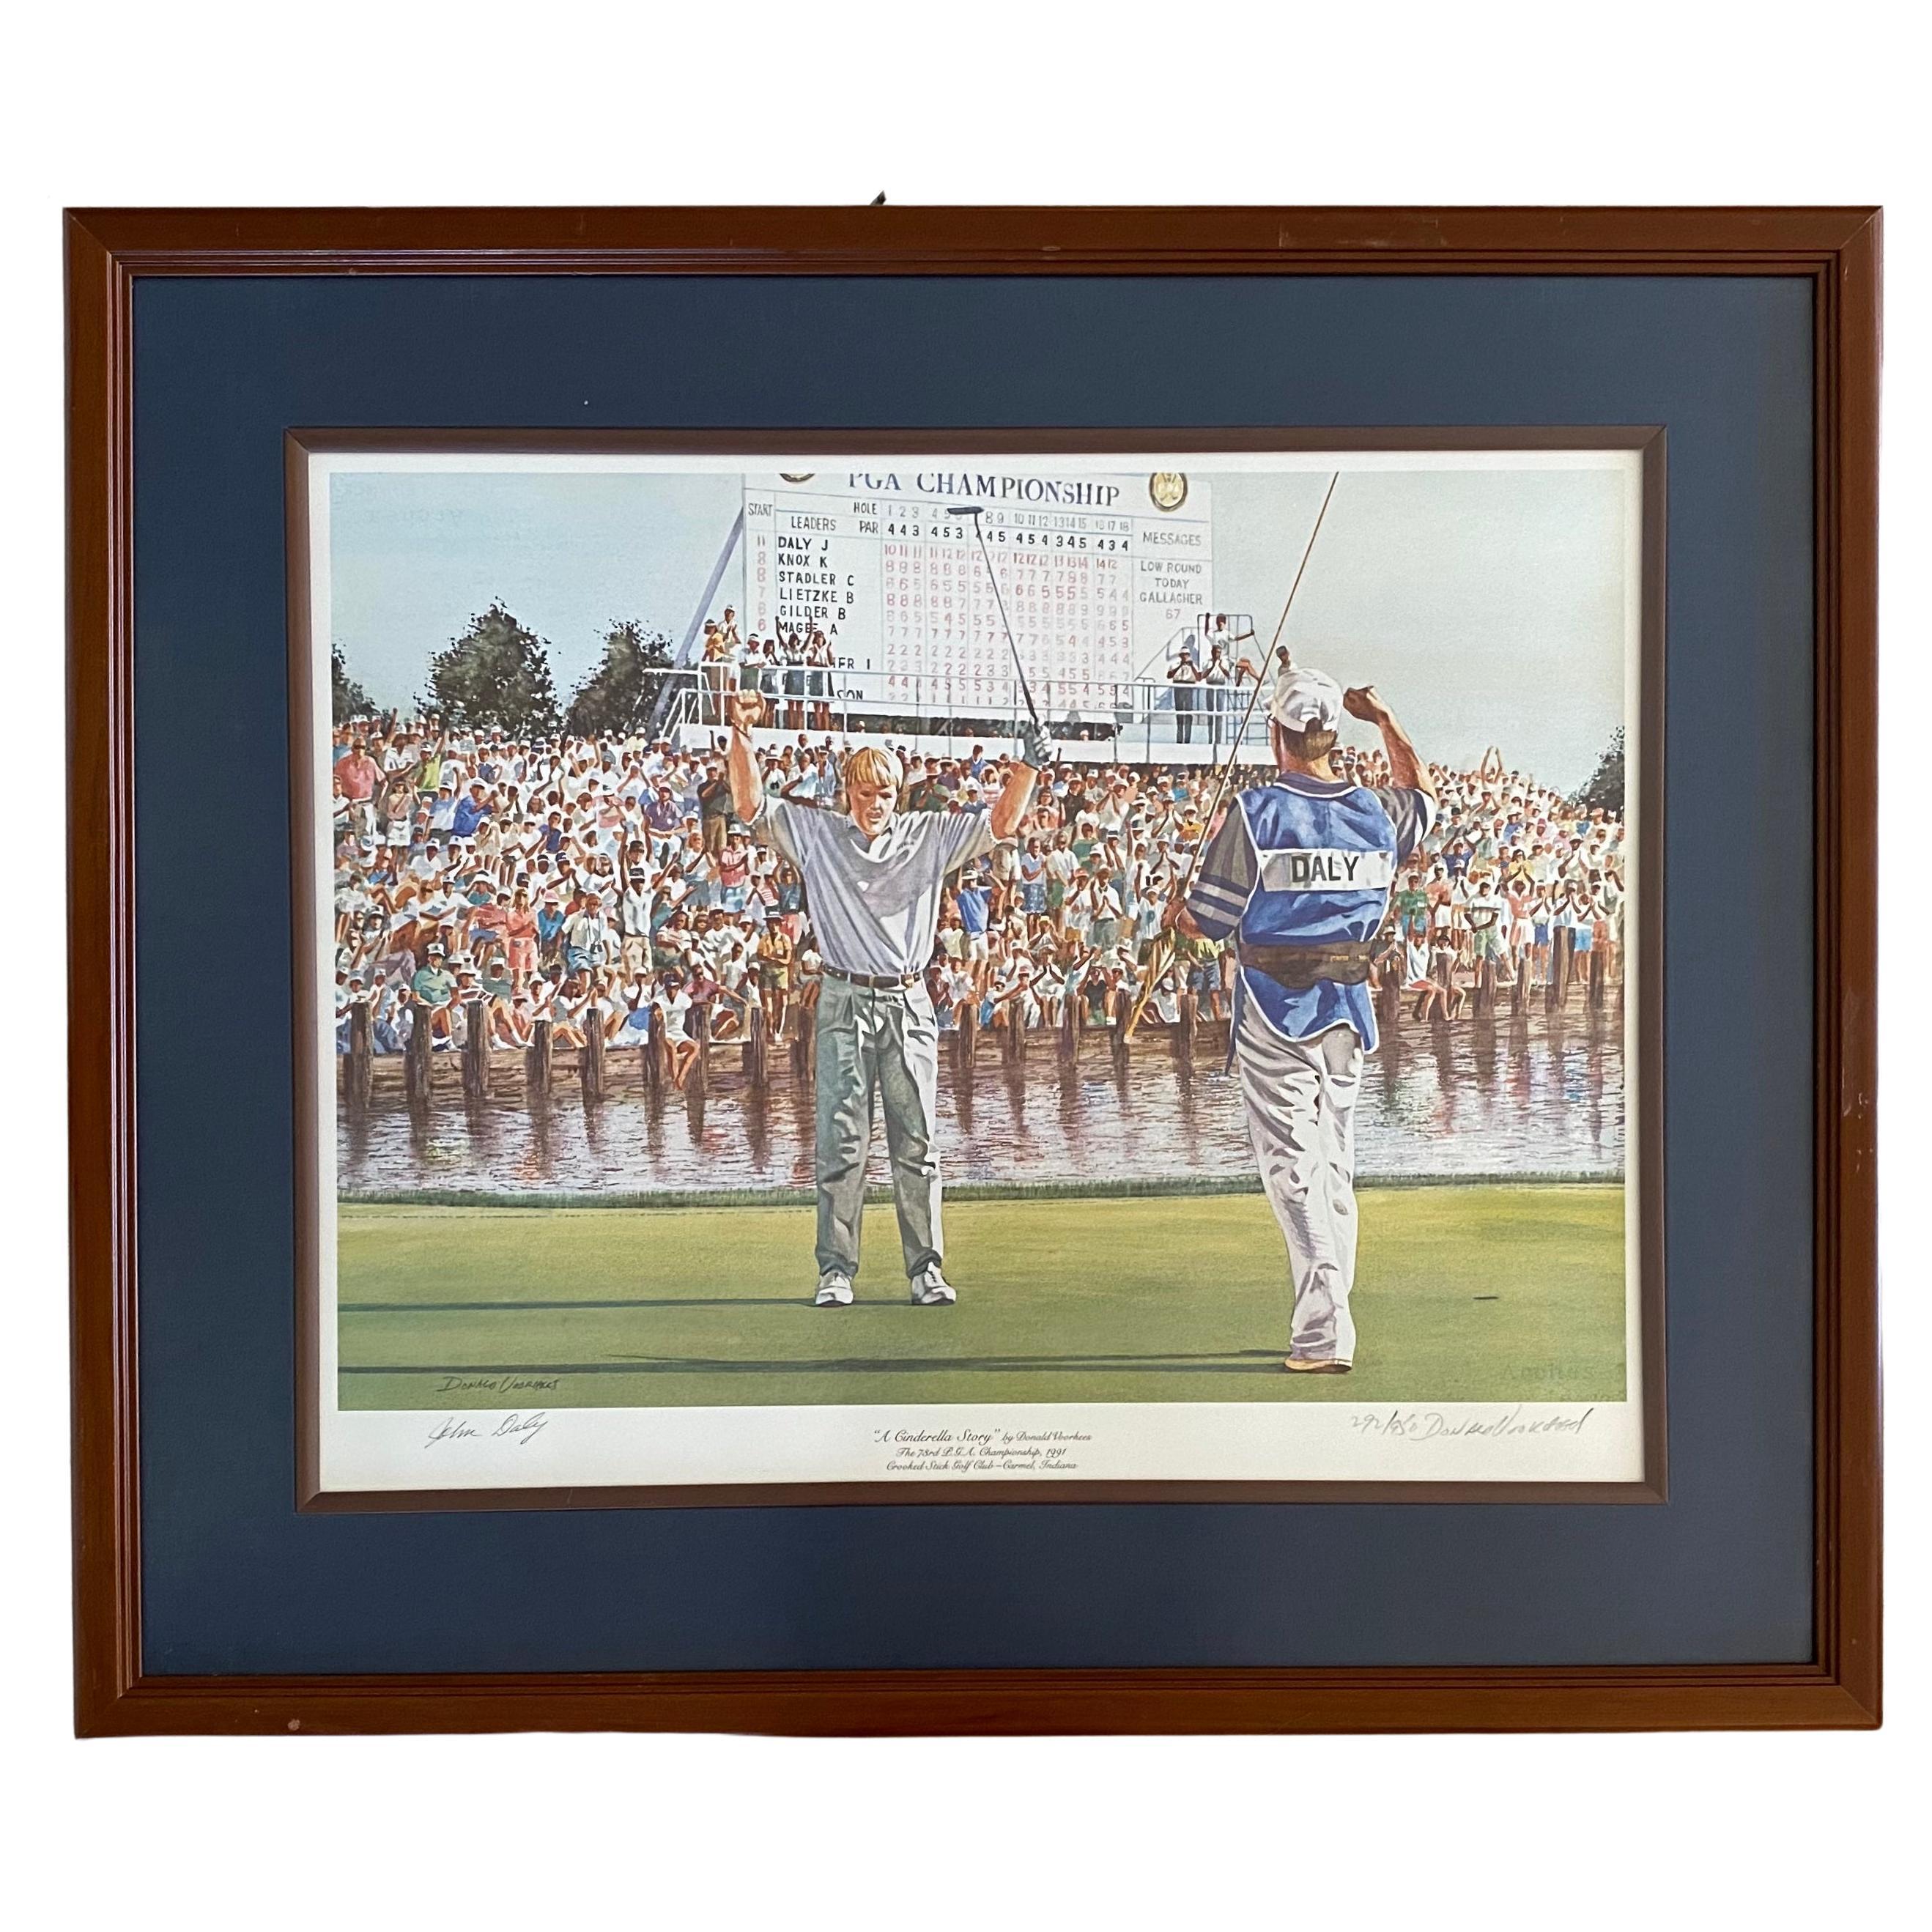 PGA Golf Tournament Autographed Lithograph, Certified Sports Memorabilia For Sale